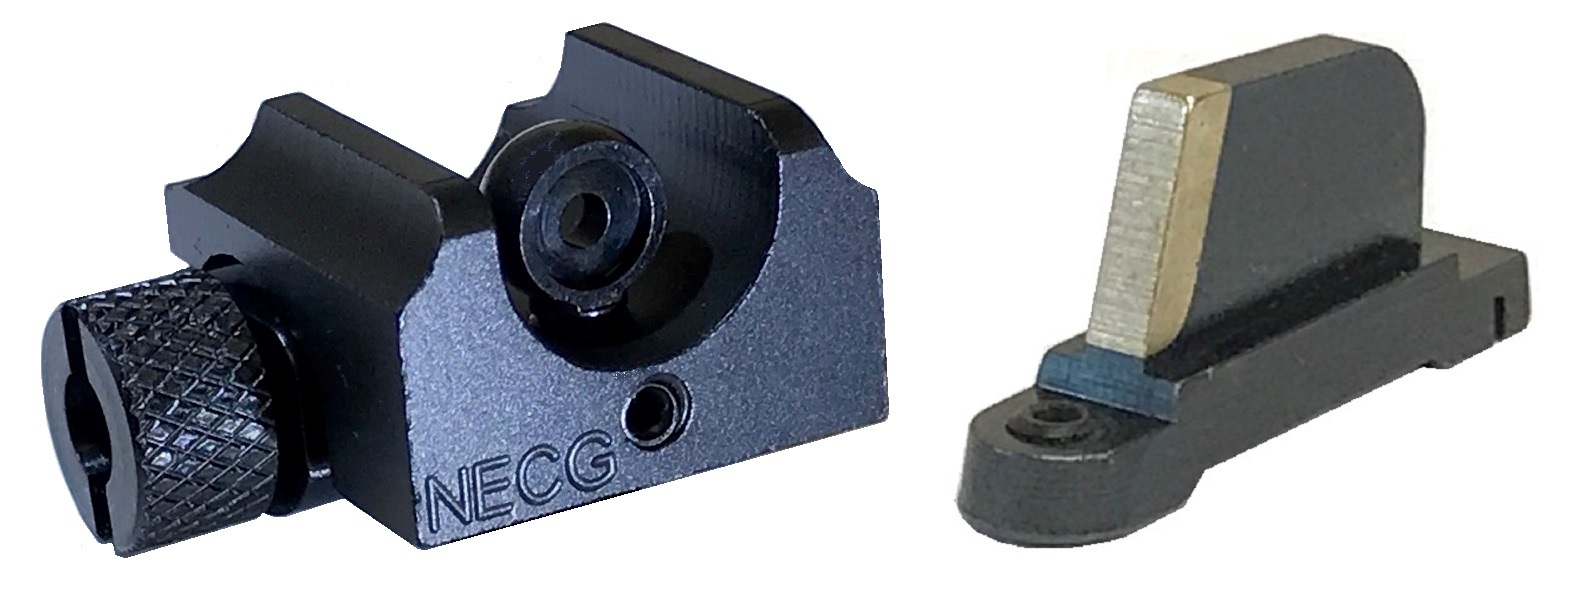 NECG RUGER Ghost Ring Peep & Patridge Sight Set    N-100G-Set